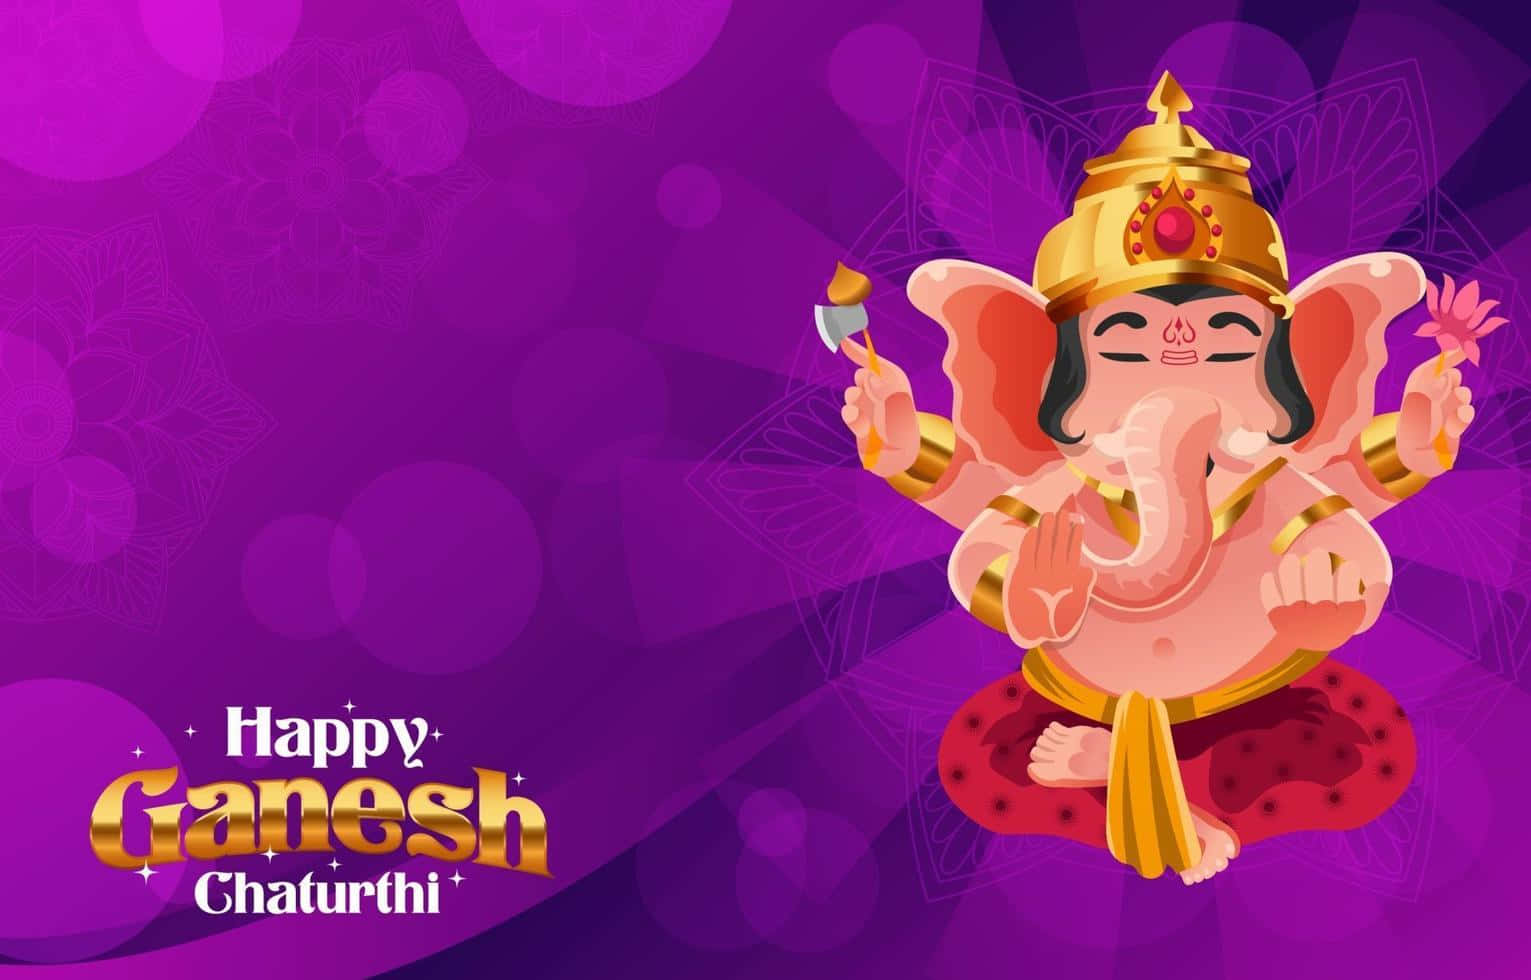 Celebrate Ganesh Chaturthi with happiness and joy!